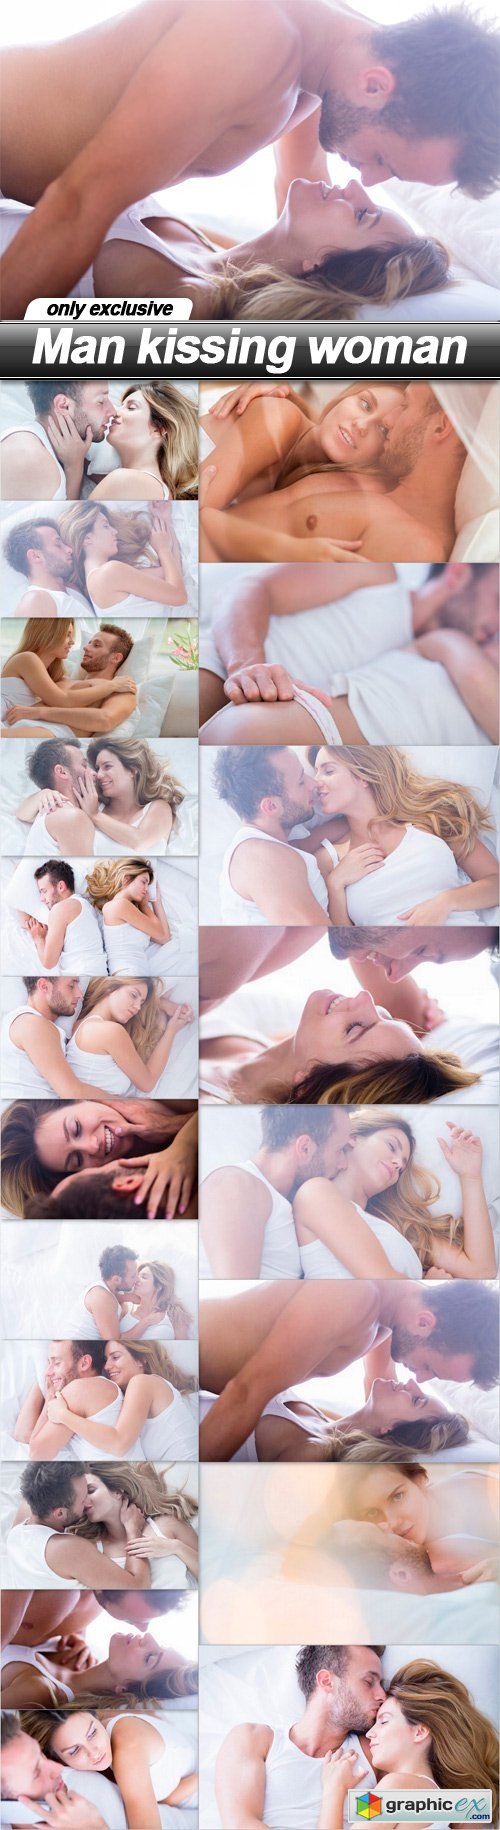 Man kissing woman - 20 UHQ JPEG